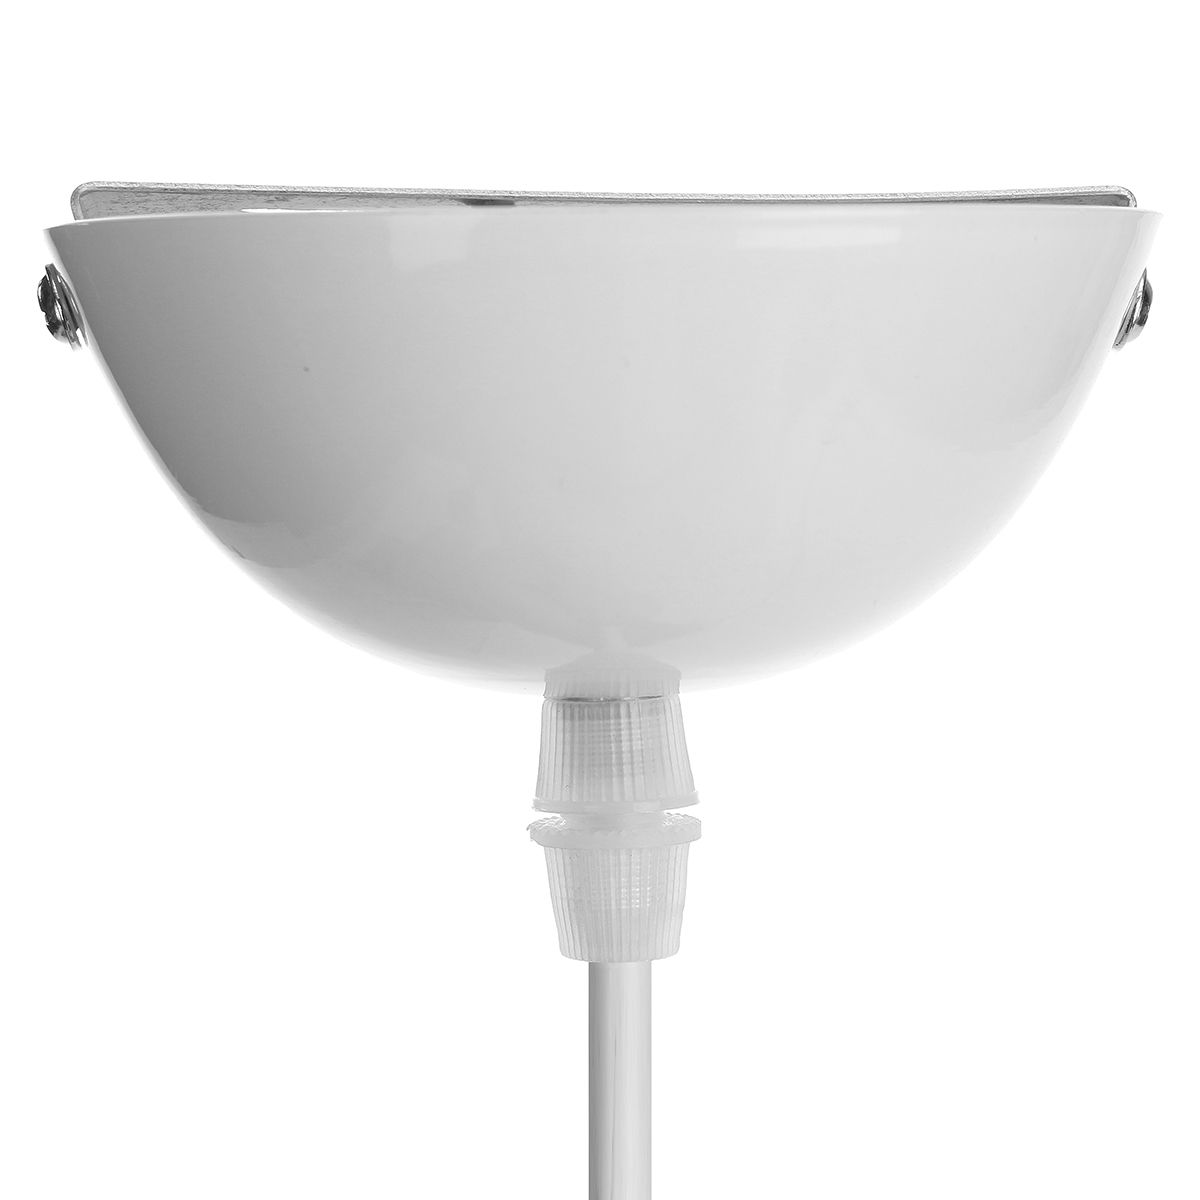 Modern-Chandelier-Retro-Style-Ceiling-Pendant-Light-Shade-Lamp-Shades-AC100-240V-1137246